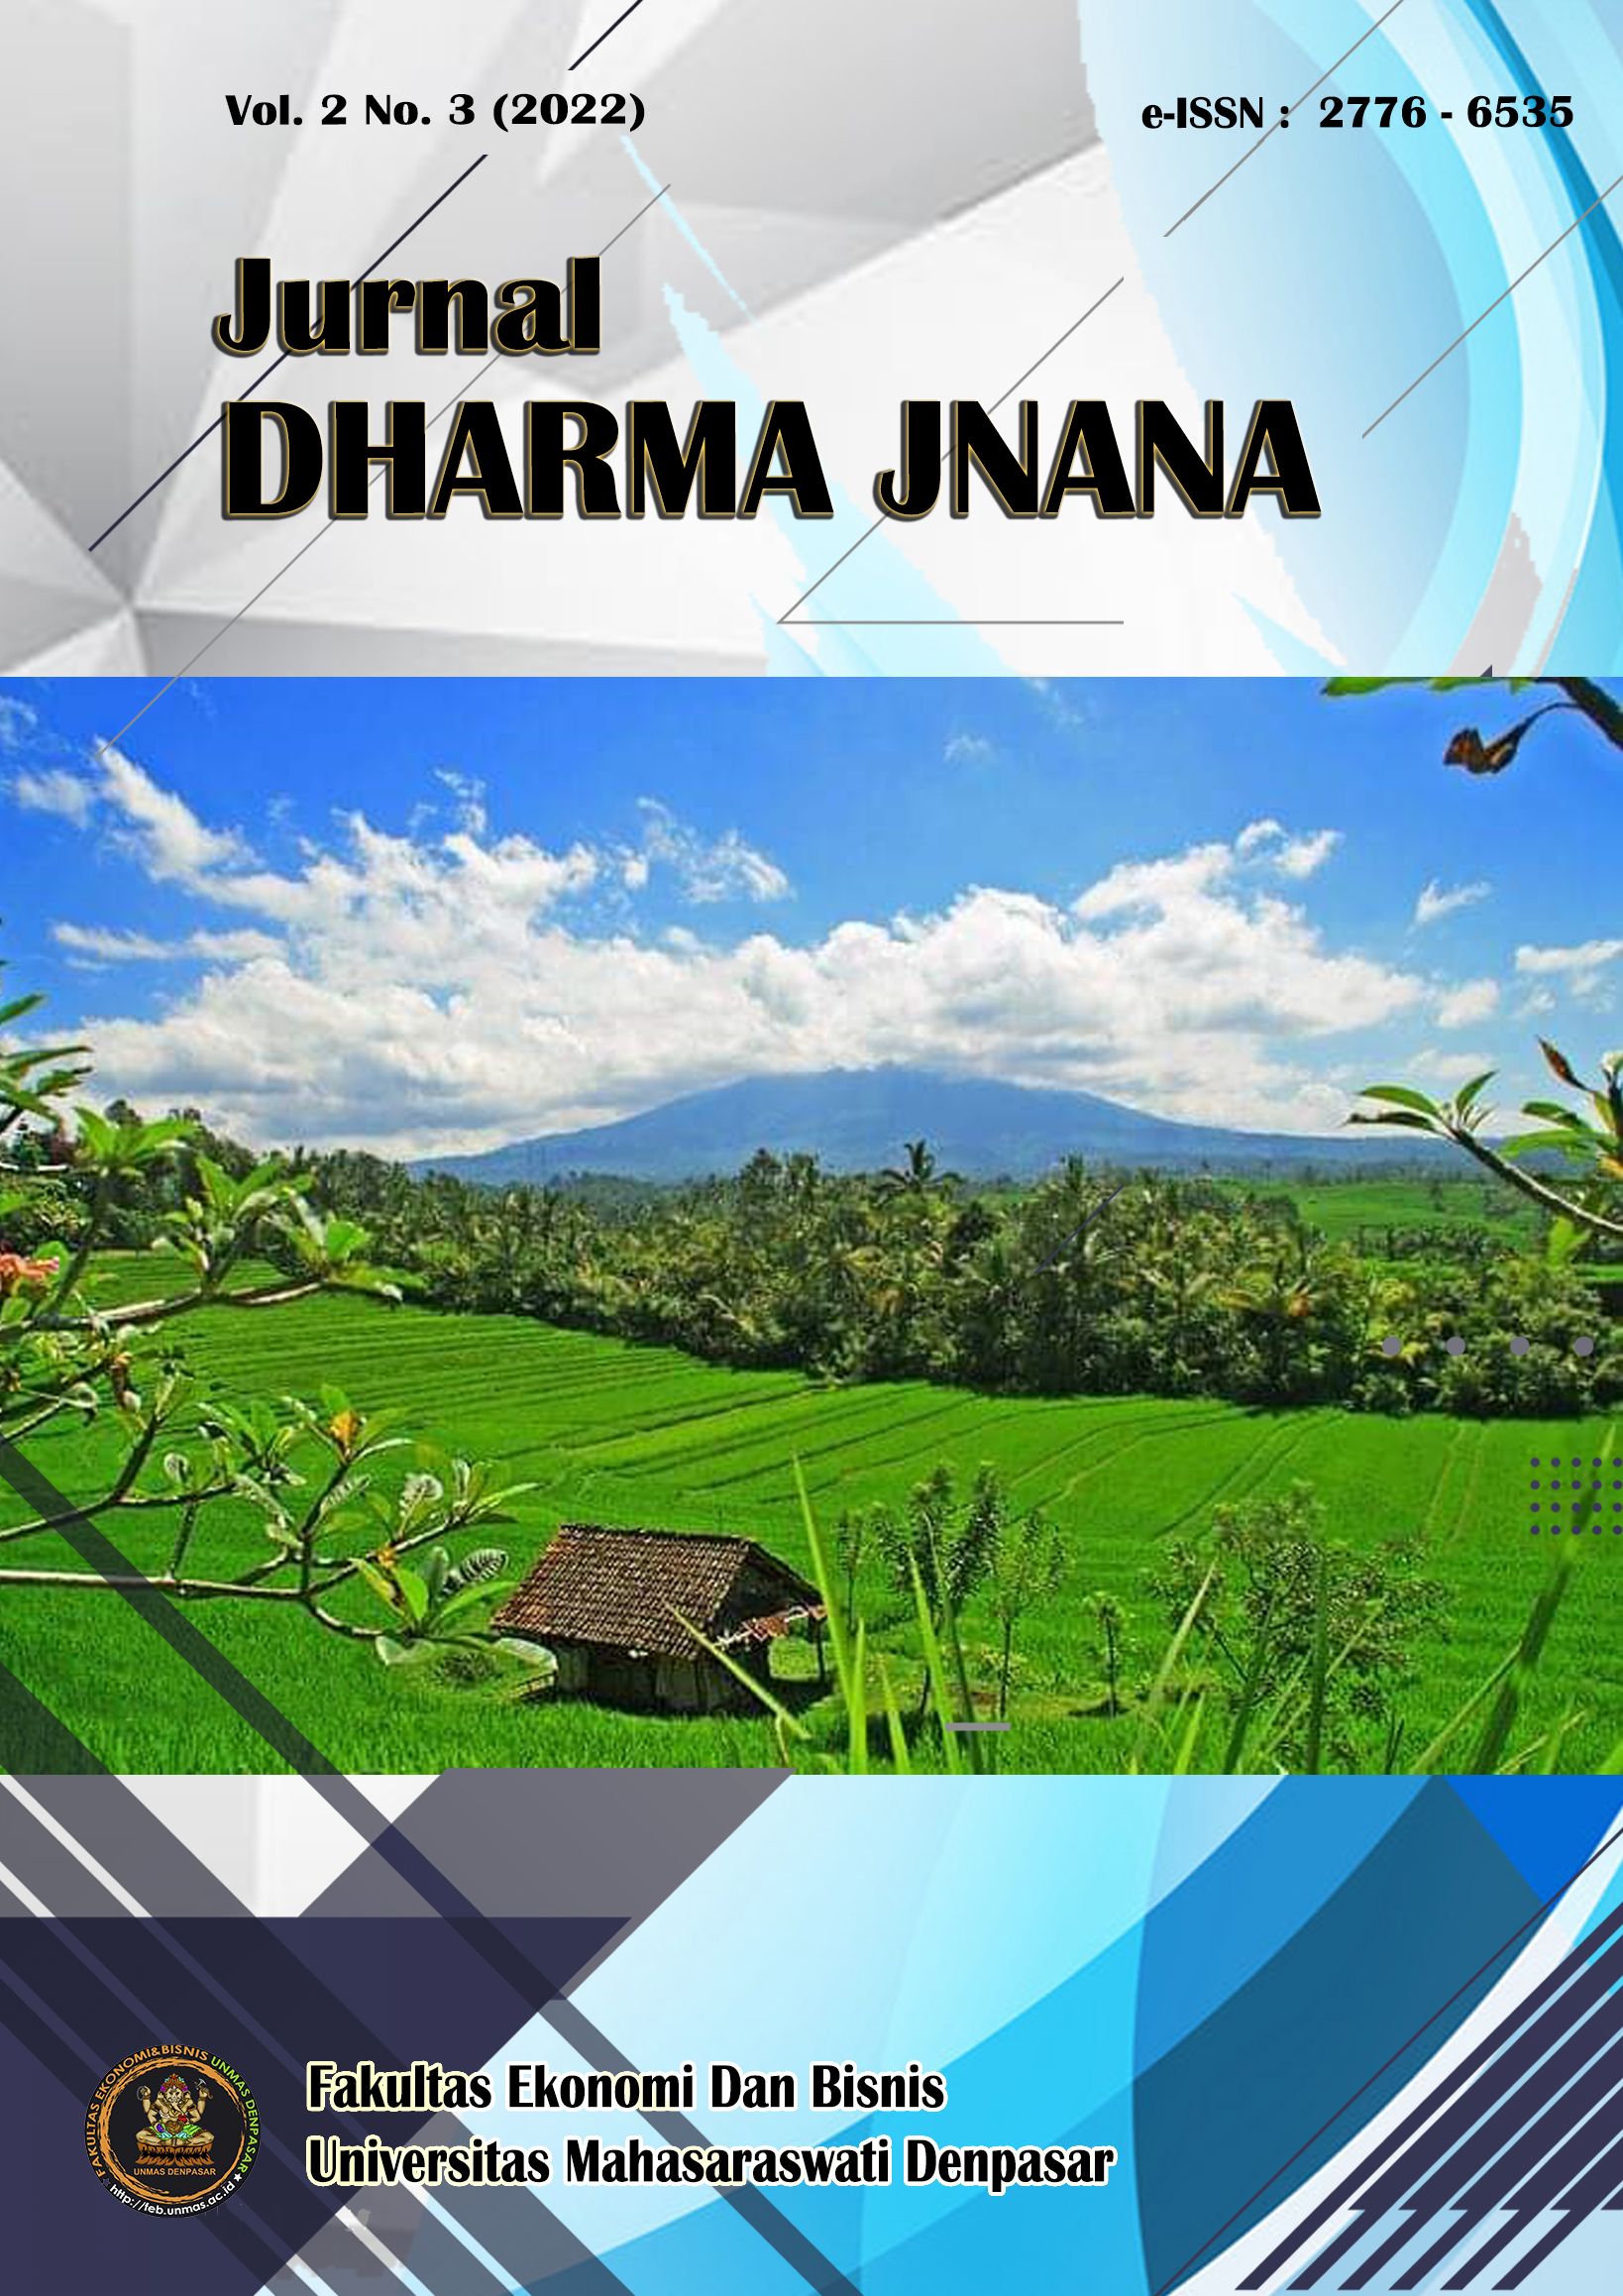 					View Vol. 3 No. 3 (2023): JURNAL DHARMA JNANA
				